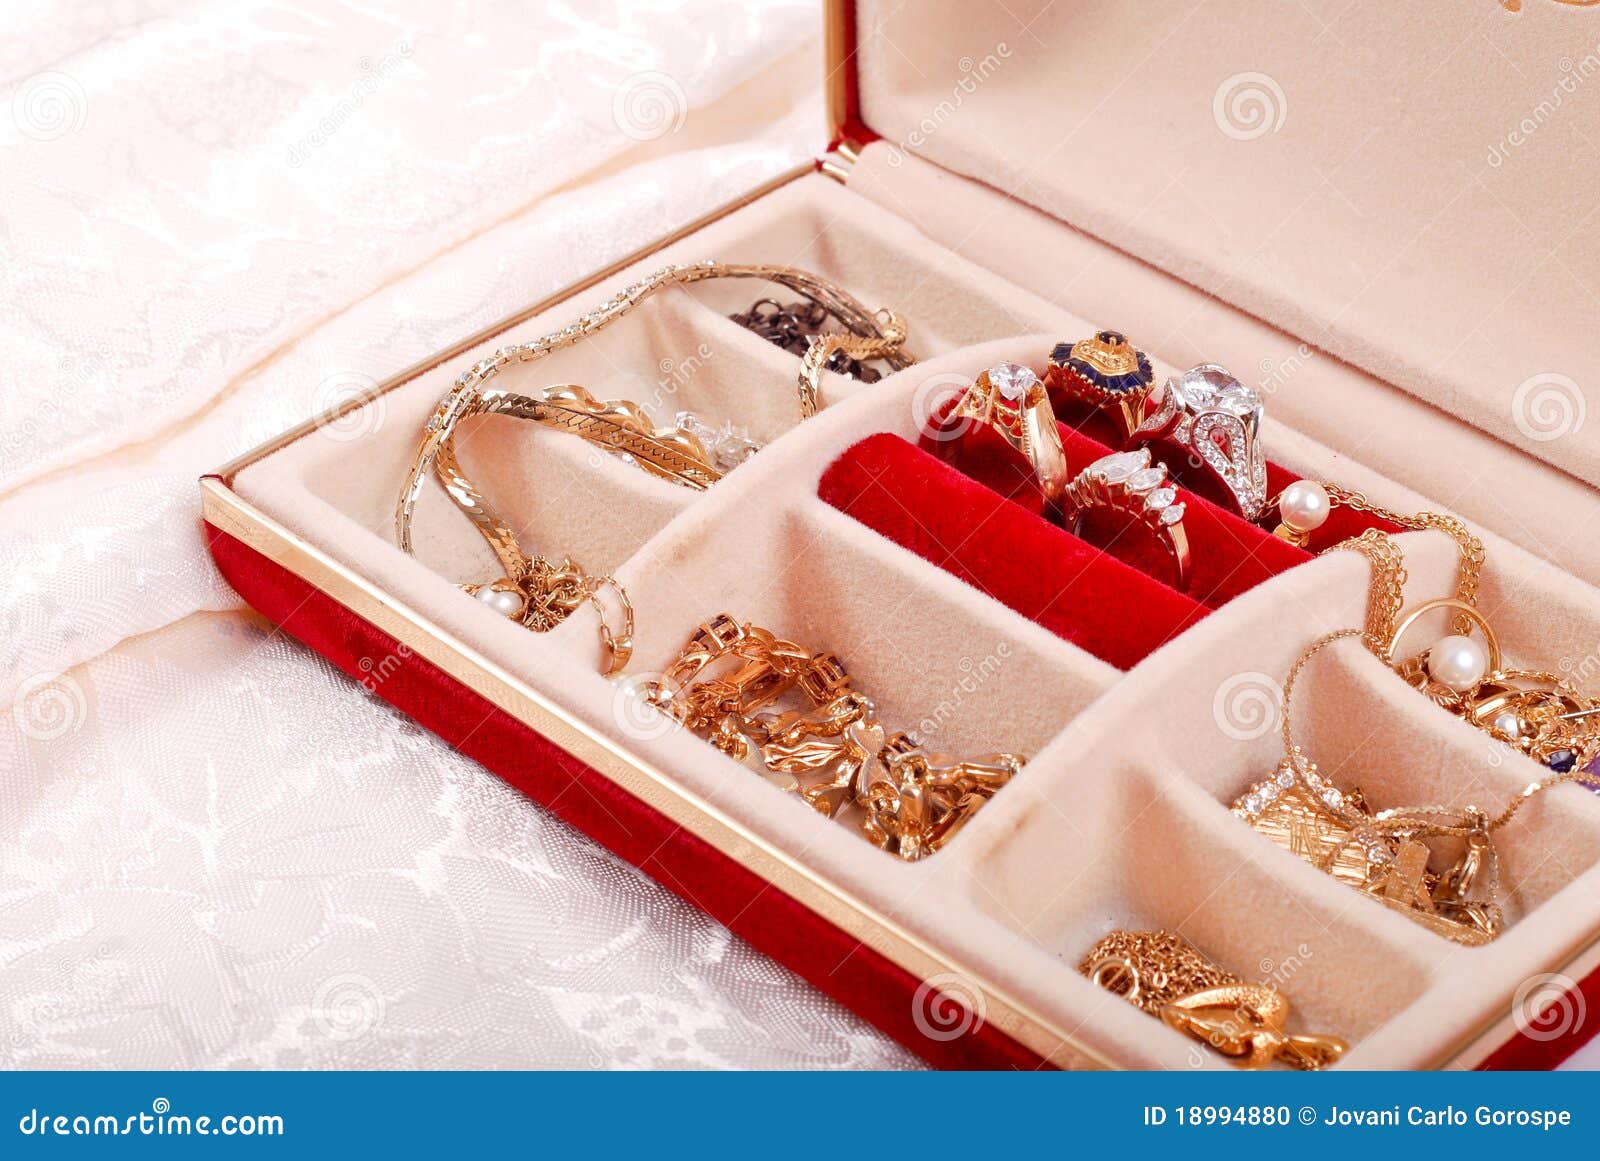 jewelry in jewelry box